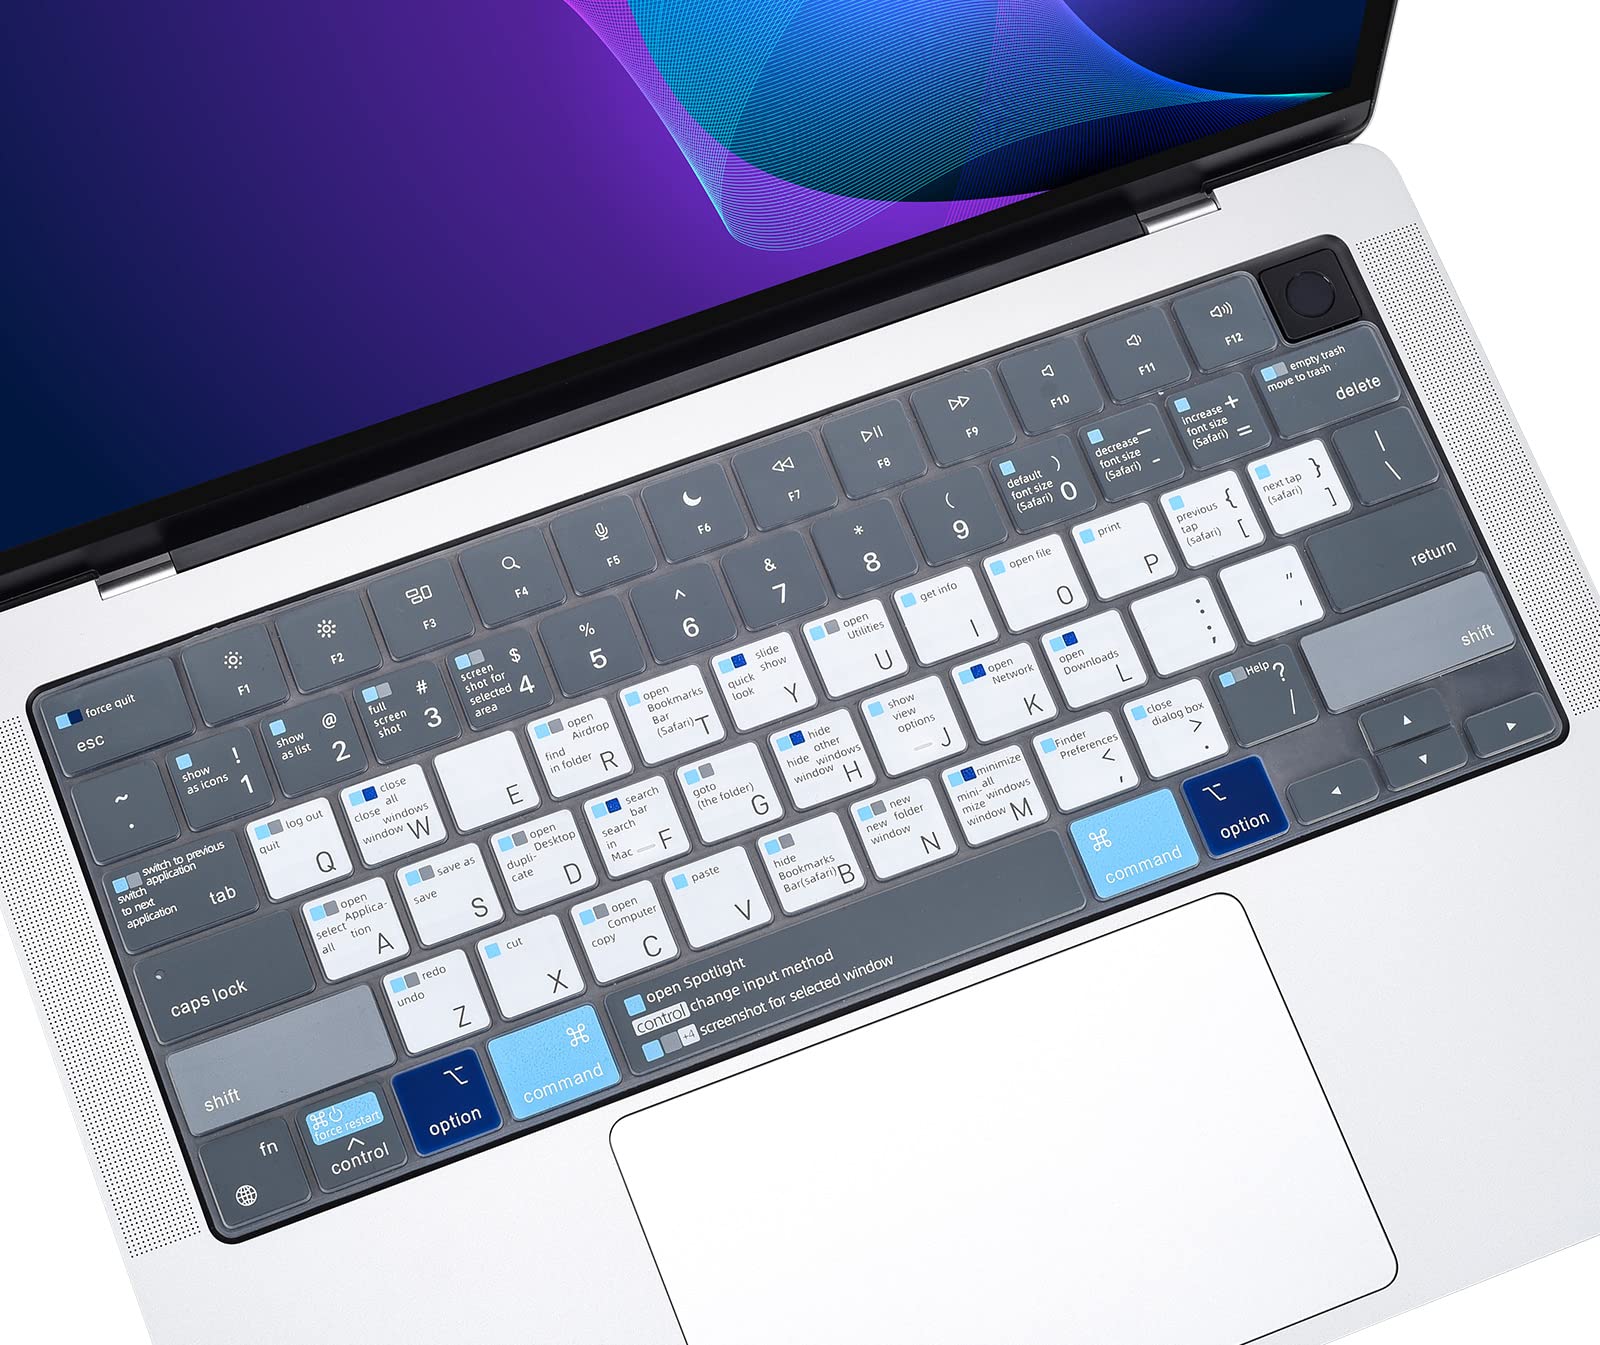 macbook pro keyboard sleeve